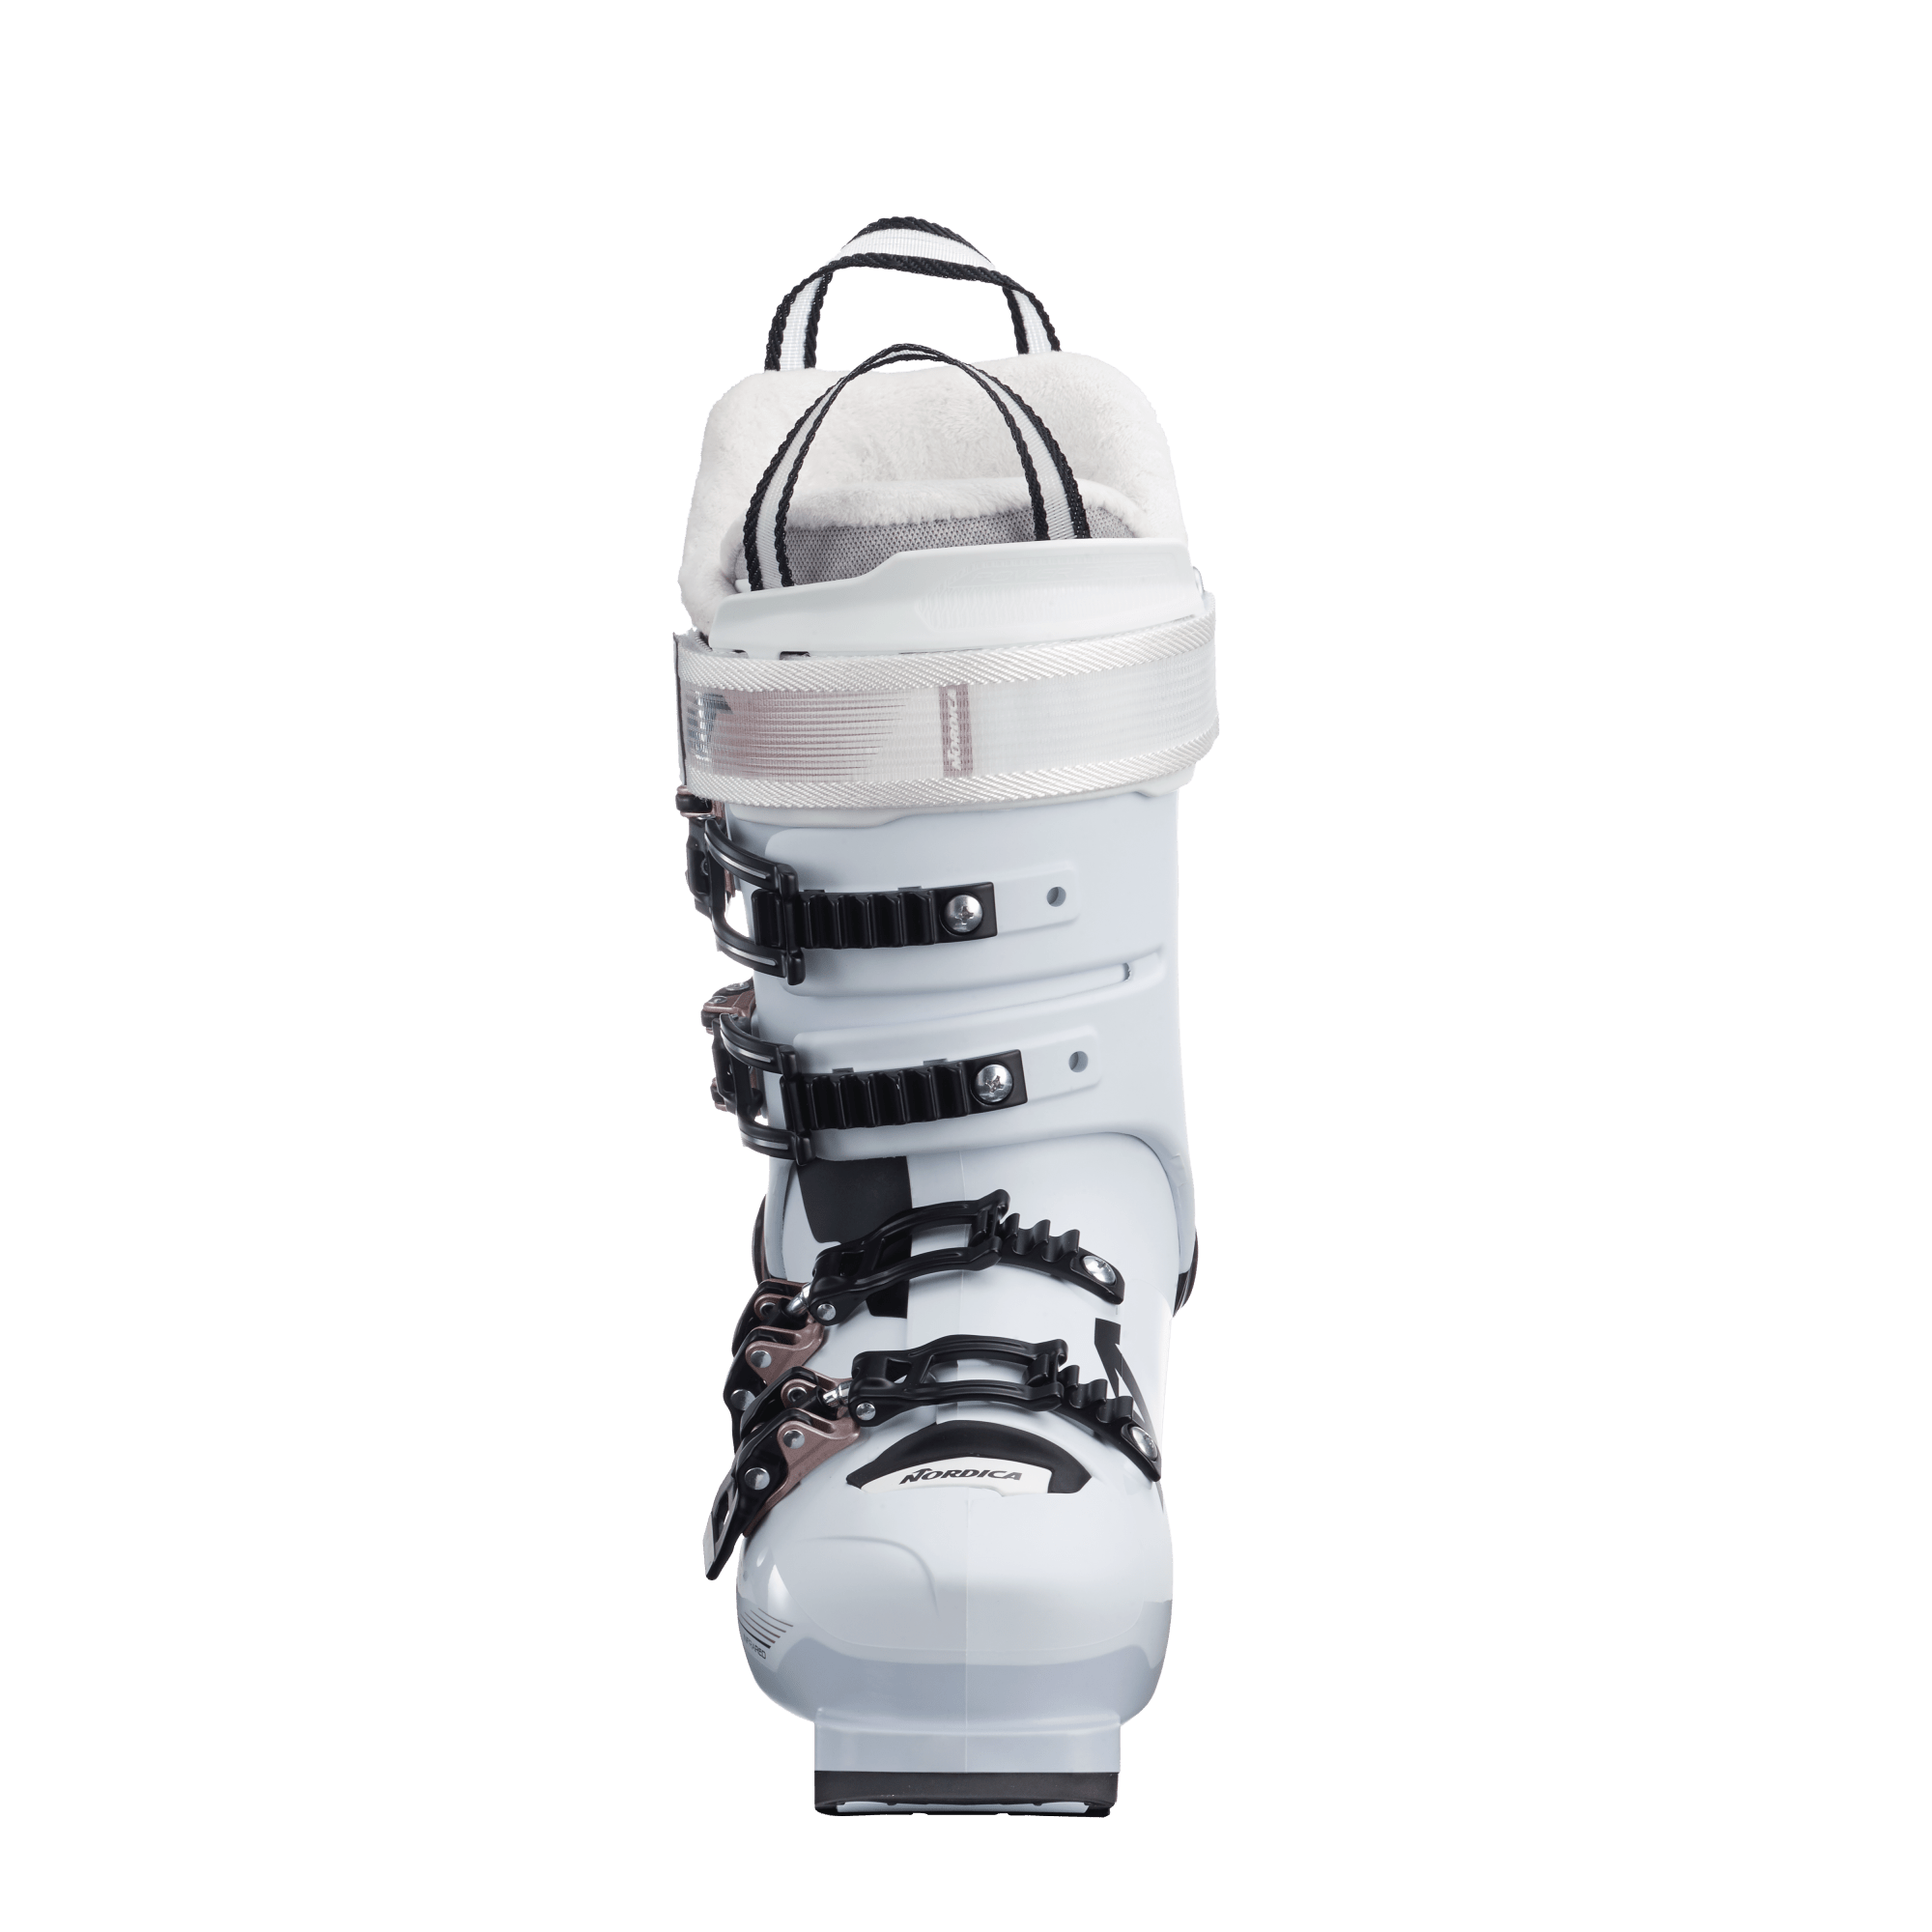 Nordica Pro Machine 105 GW Boots W | Lagazoi Shop | BOTËGHES LAGAZOI